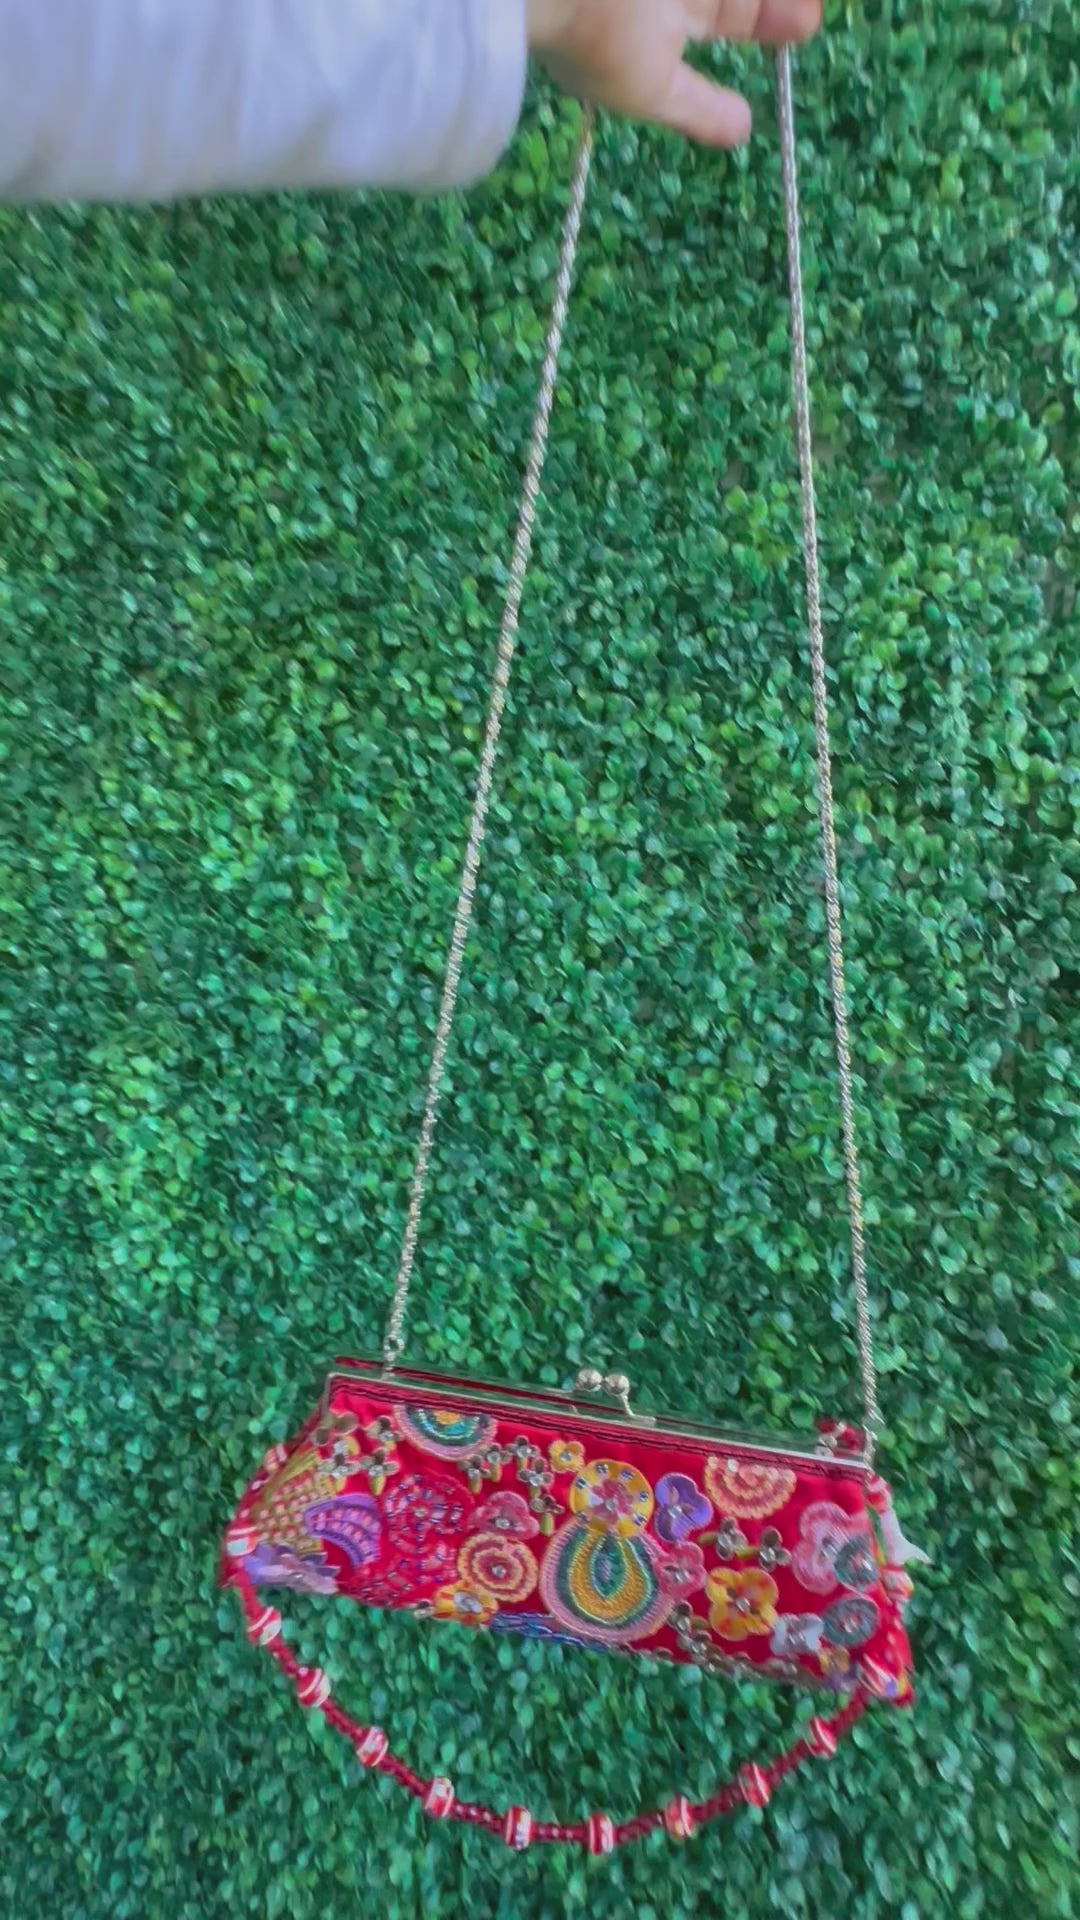 Vintage Colorful Red Floral Sequin Purse Bag Clutch